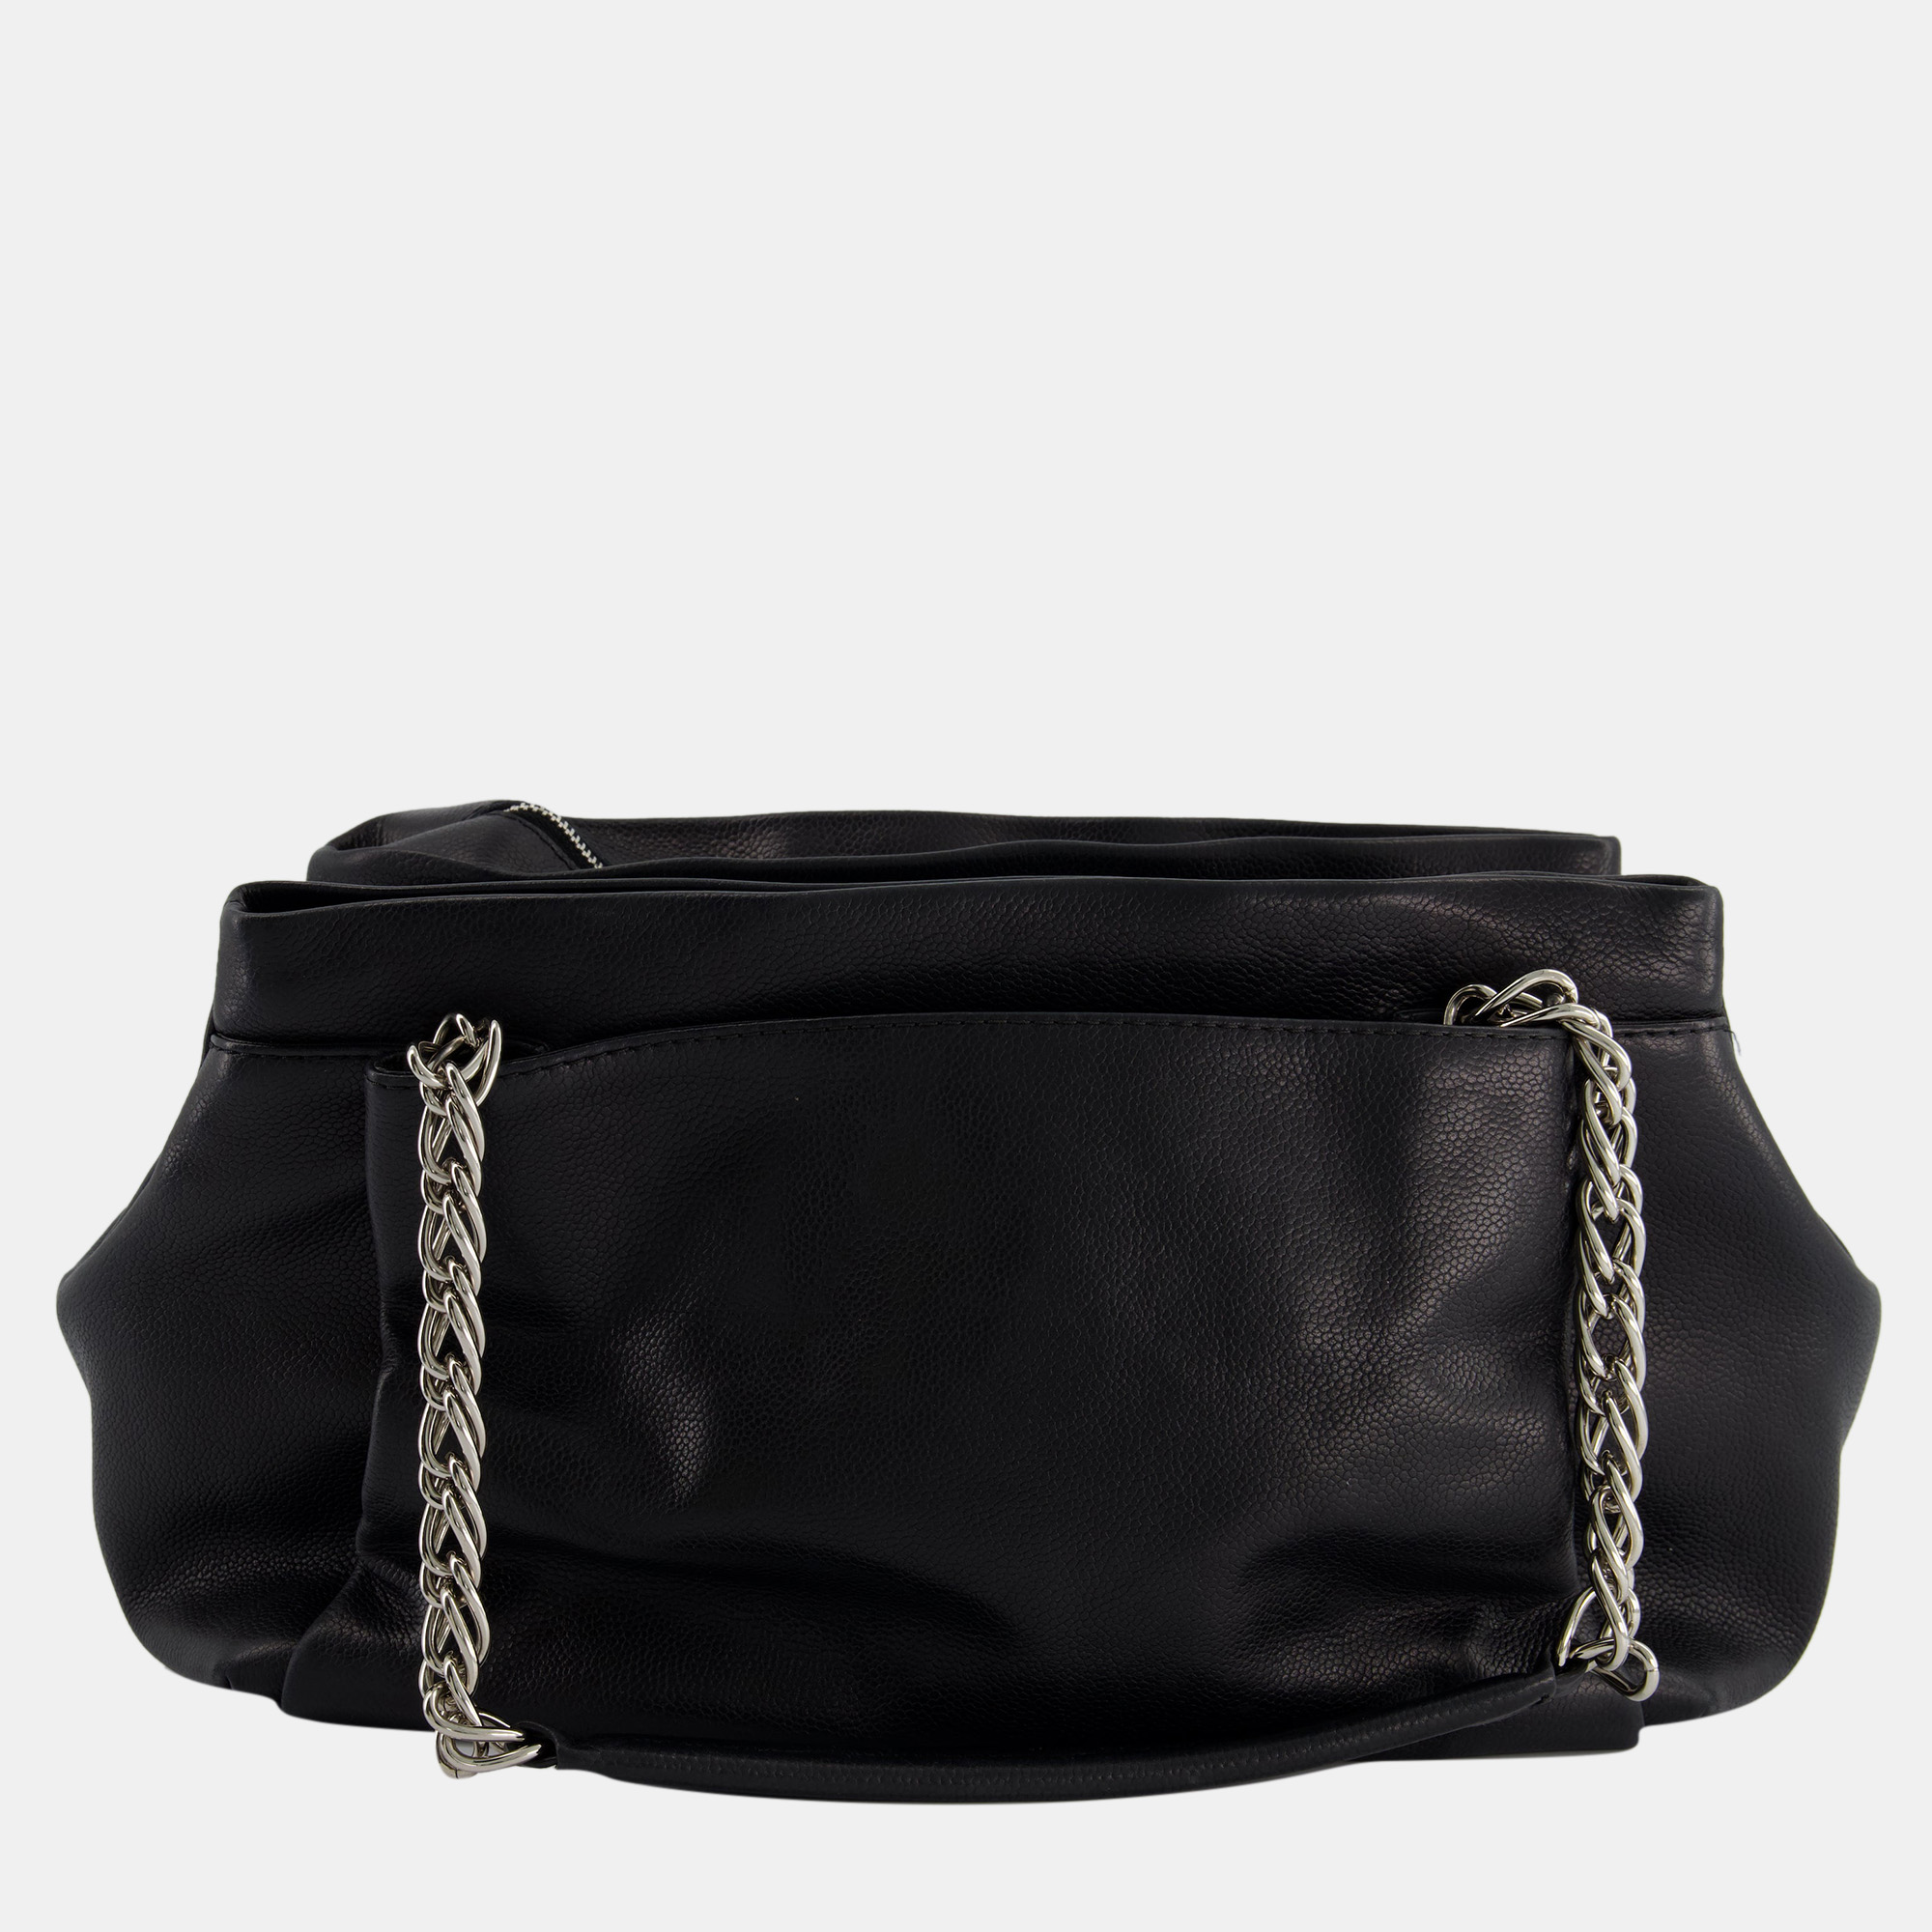 Chanel Black Caviar Leather CC Logo Shoulder Bag With Silver Hardware